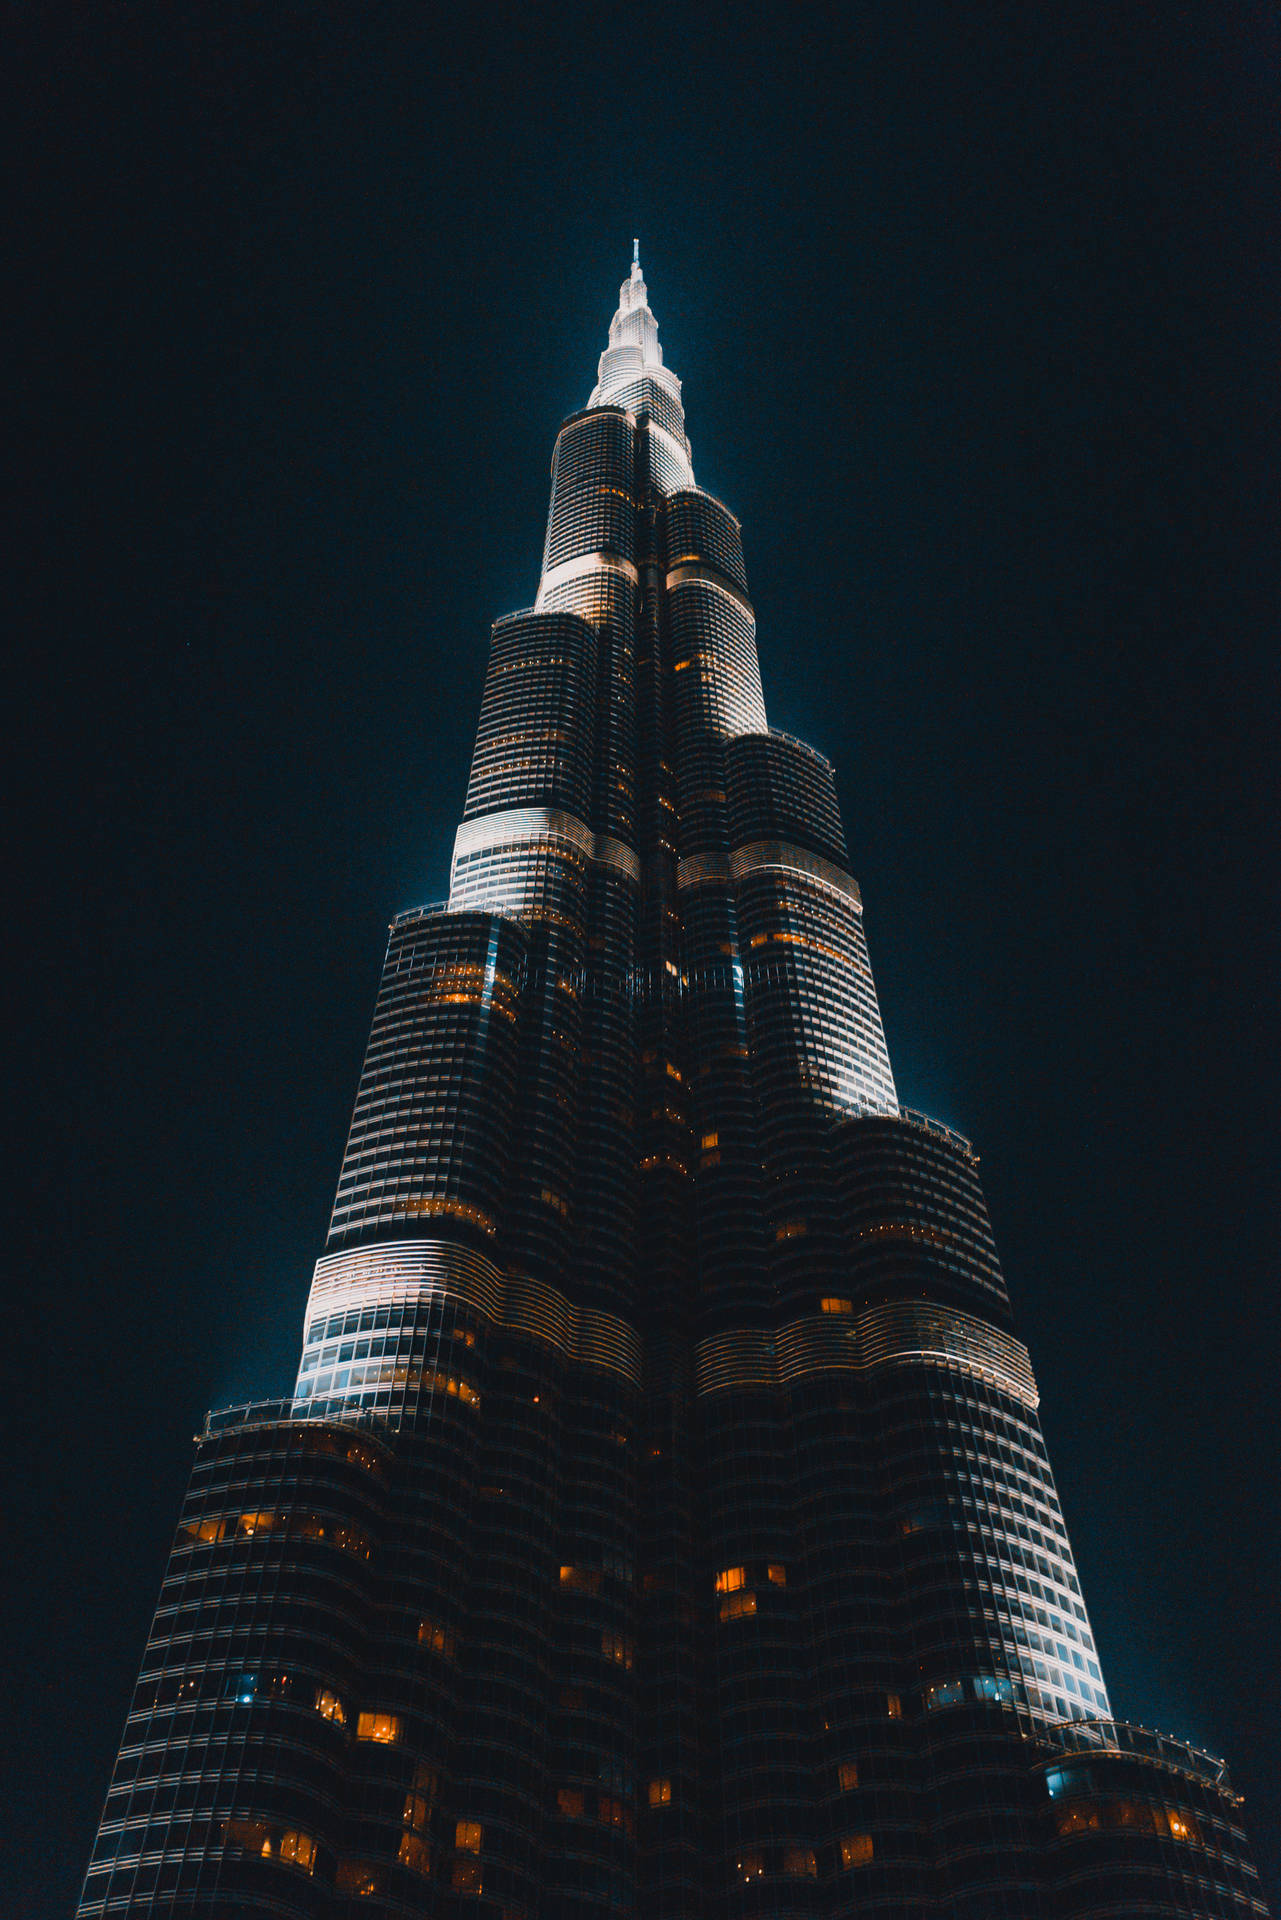 Burj Khalifa Skyscraper At Night Background